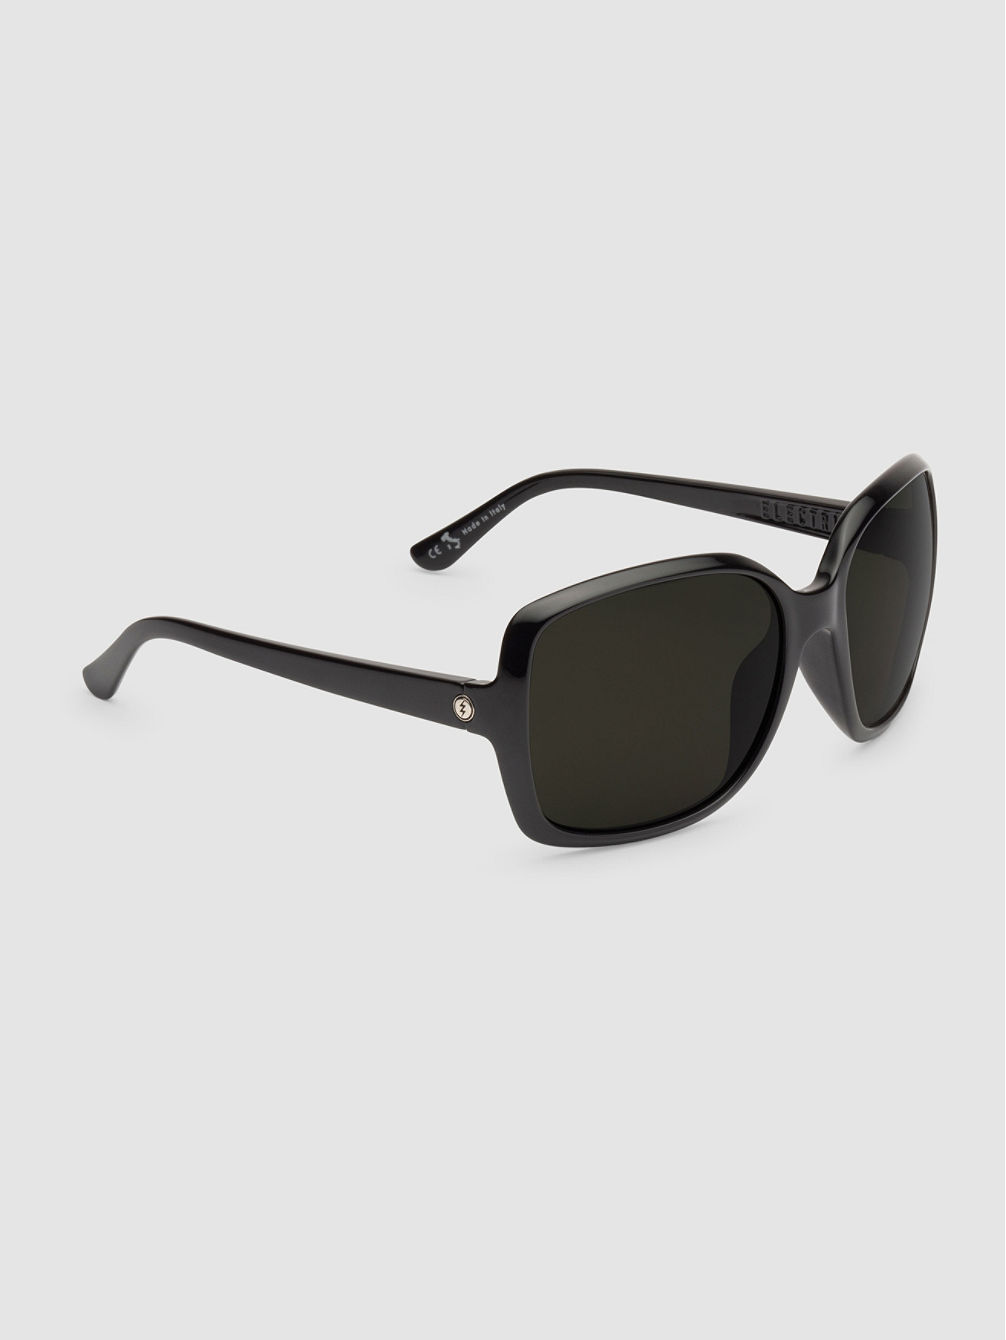 Marin Gloss Black Sunglasses